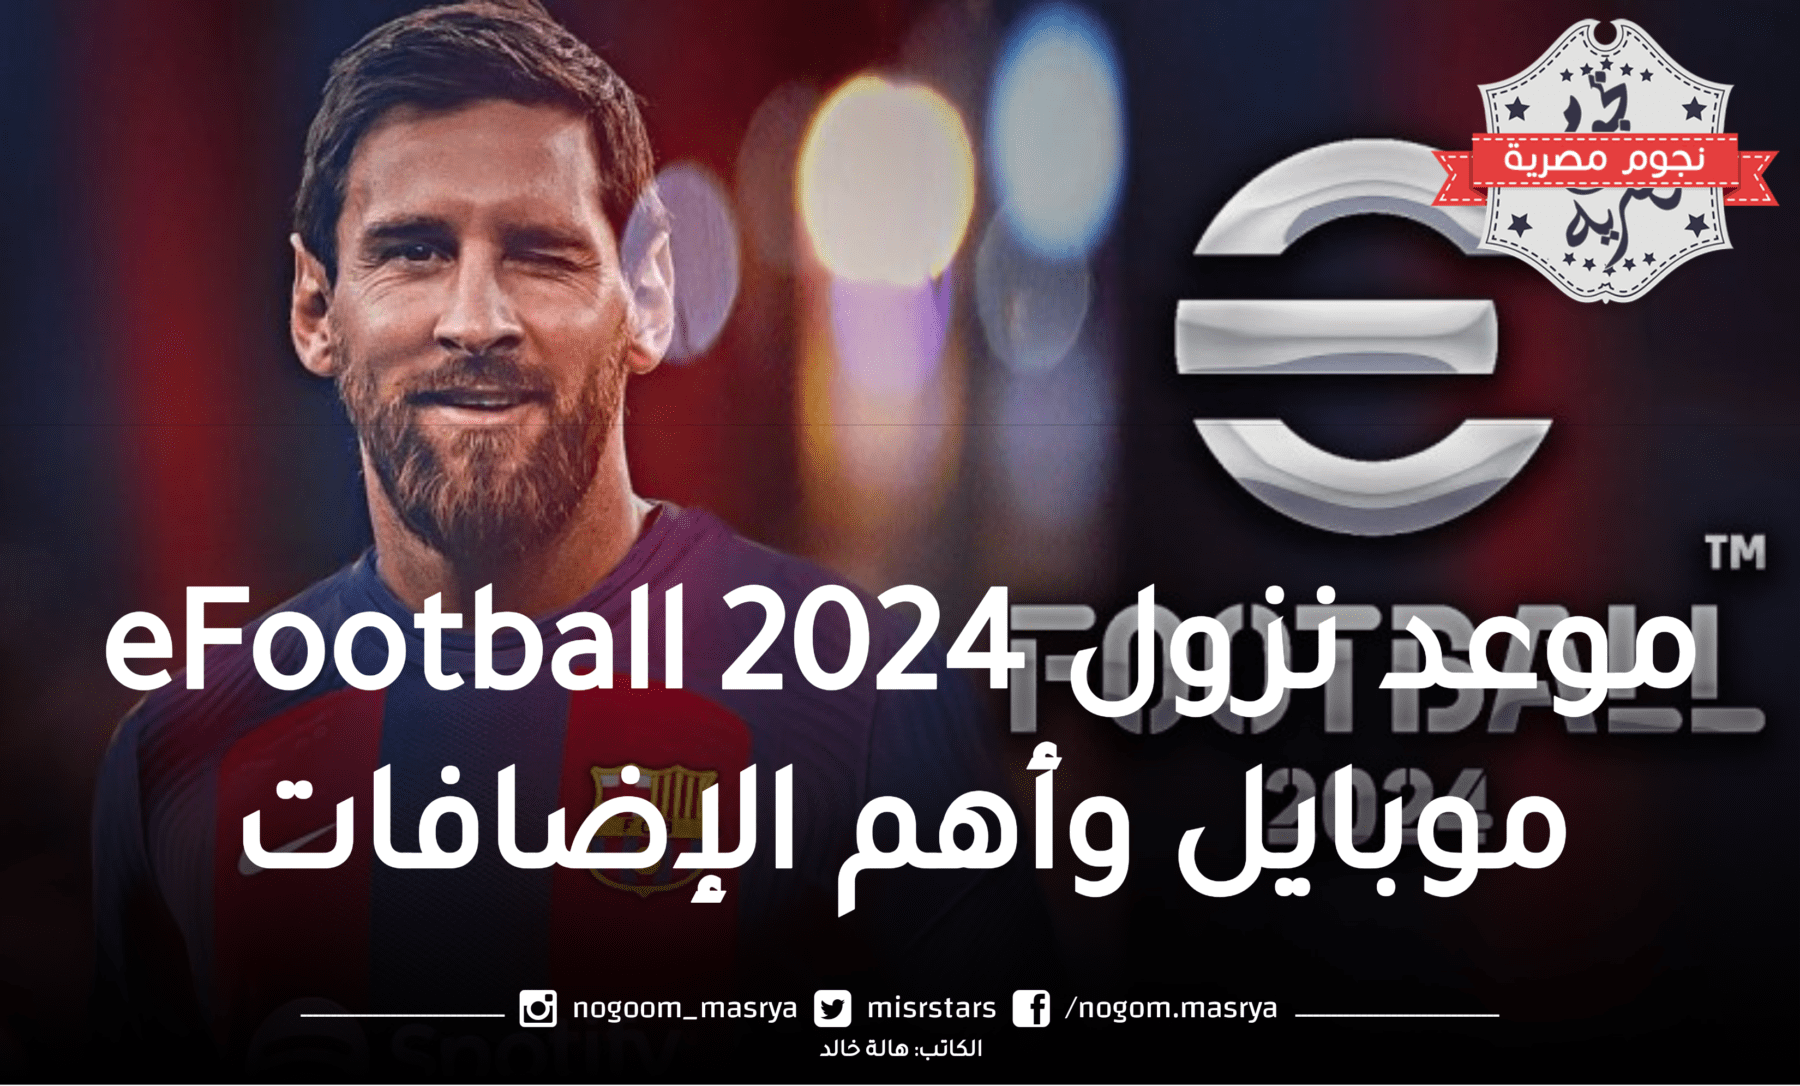 موعد نزول eFootball 2024 موبايل